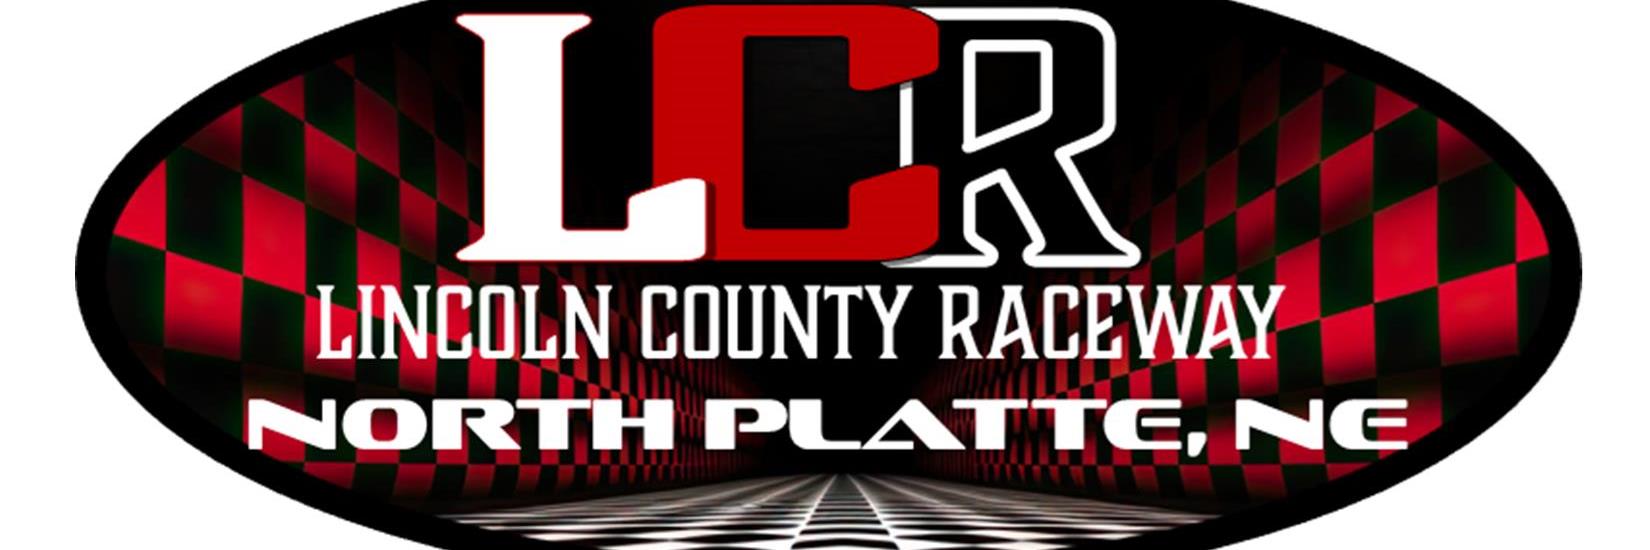 6/11/2016 - Lincoln County Raceway